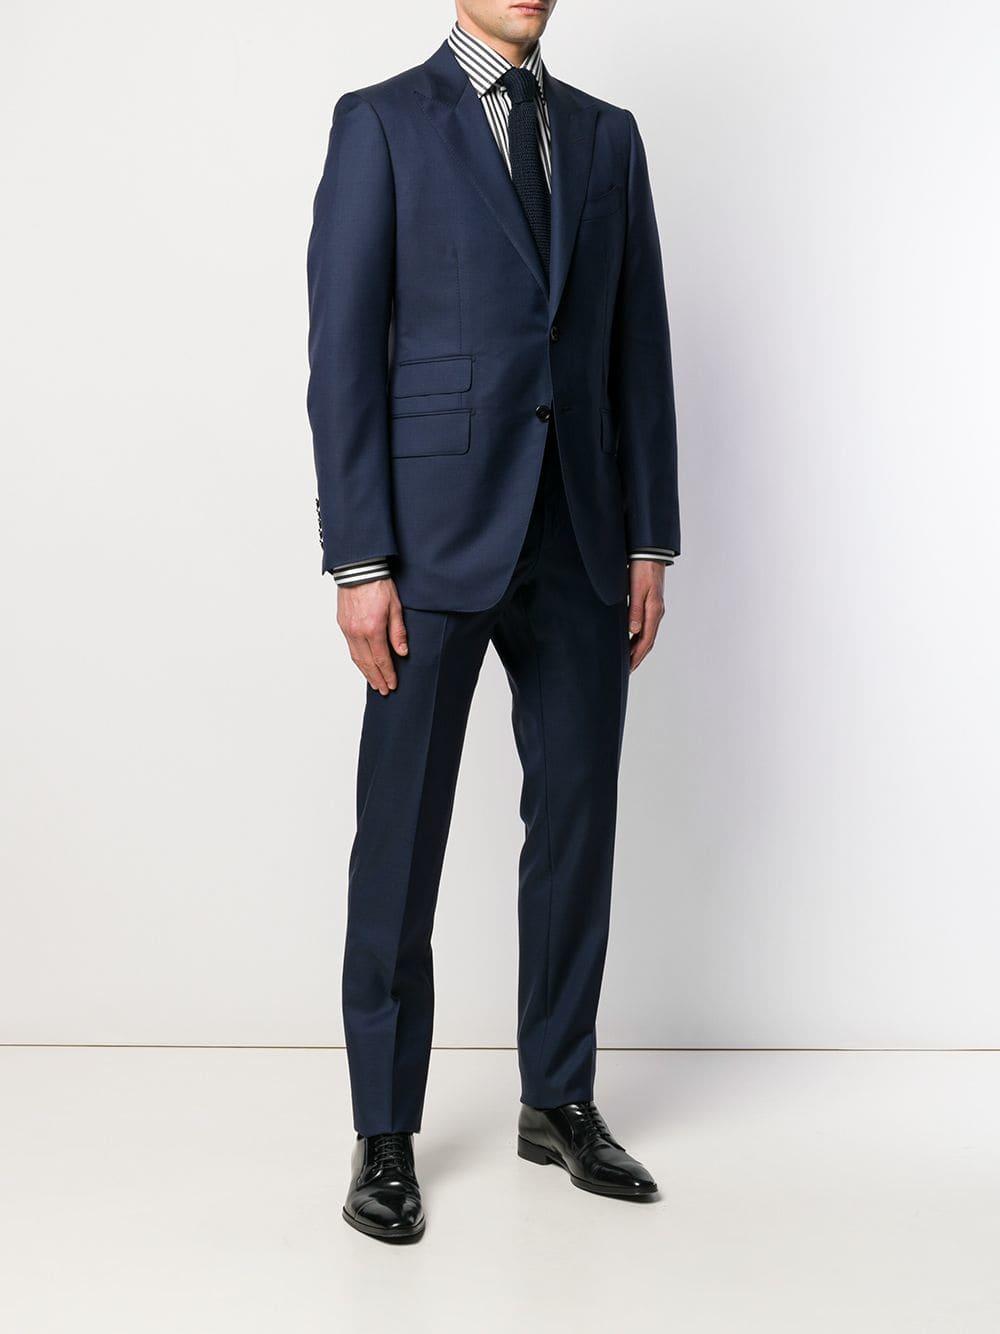 Tom Ford Wool Slim-fit Formal Suit in Blue for Men - Lyst